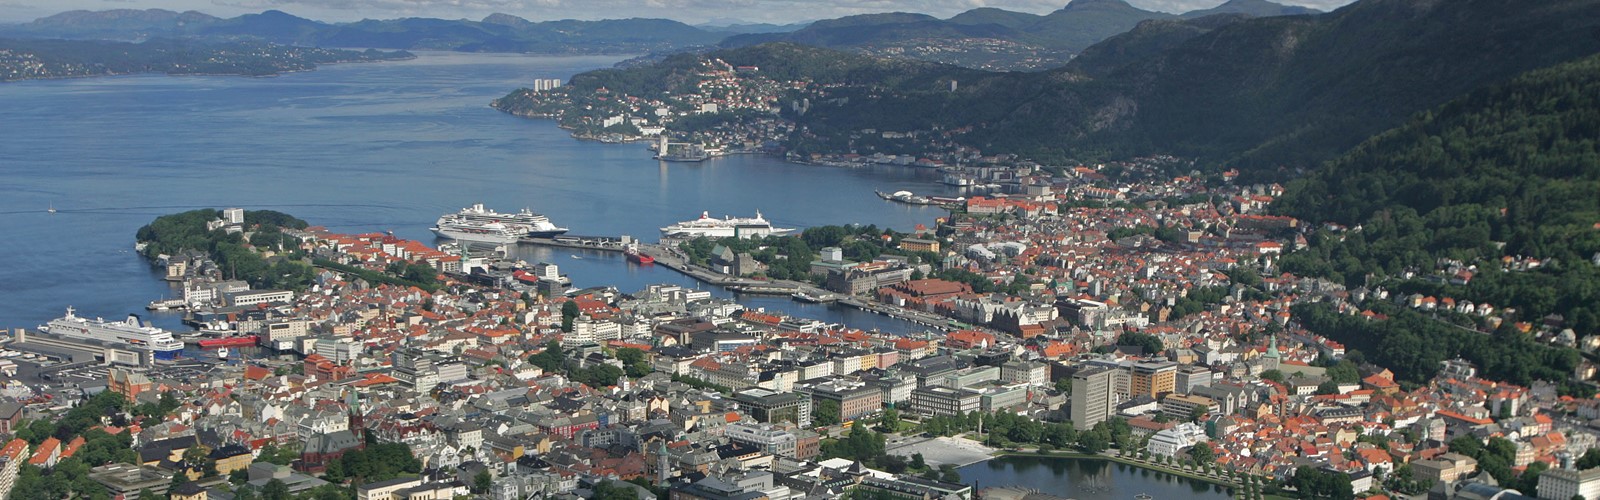 Panorama-view-of-Bergen-Jan MLillebø - visitBergen.jpg